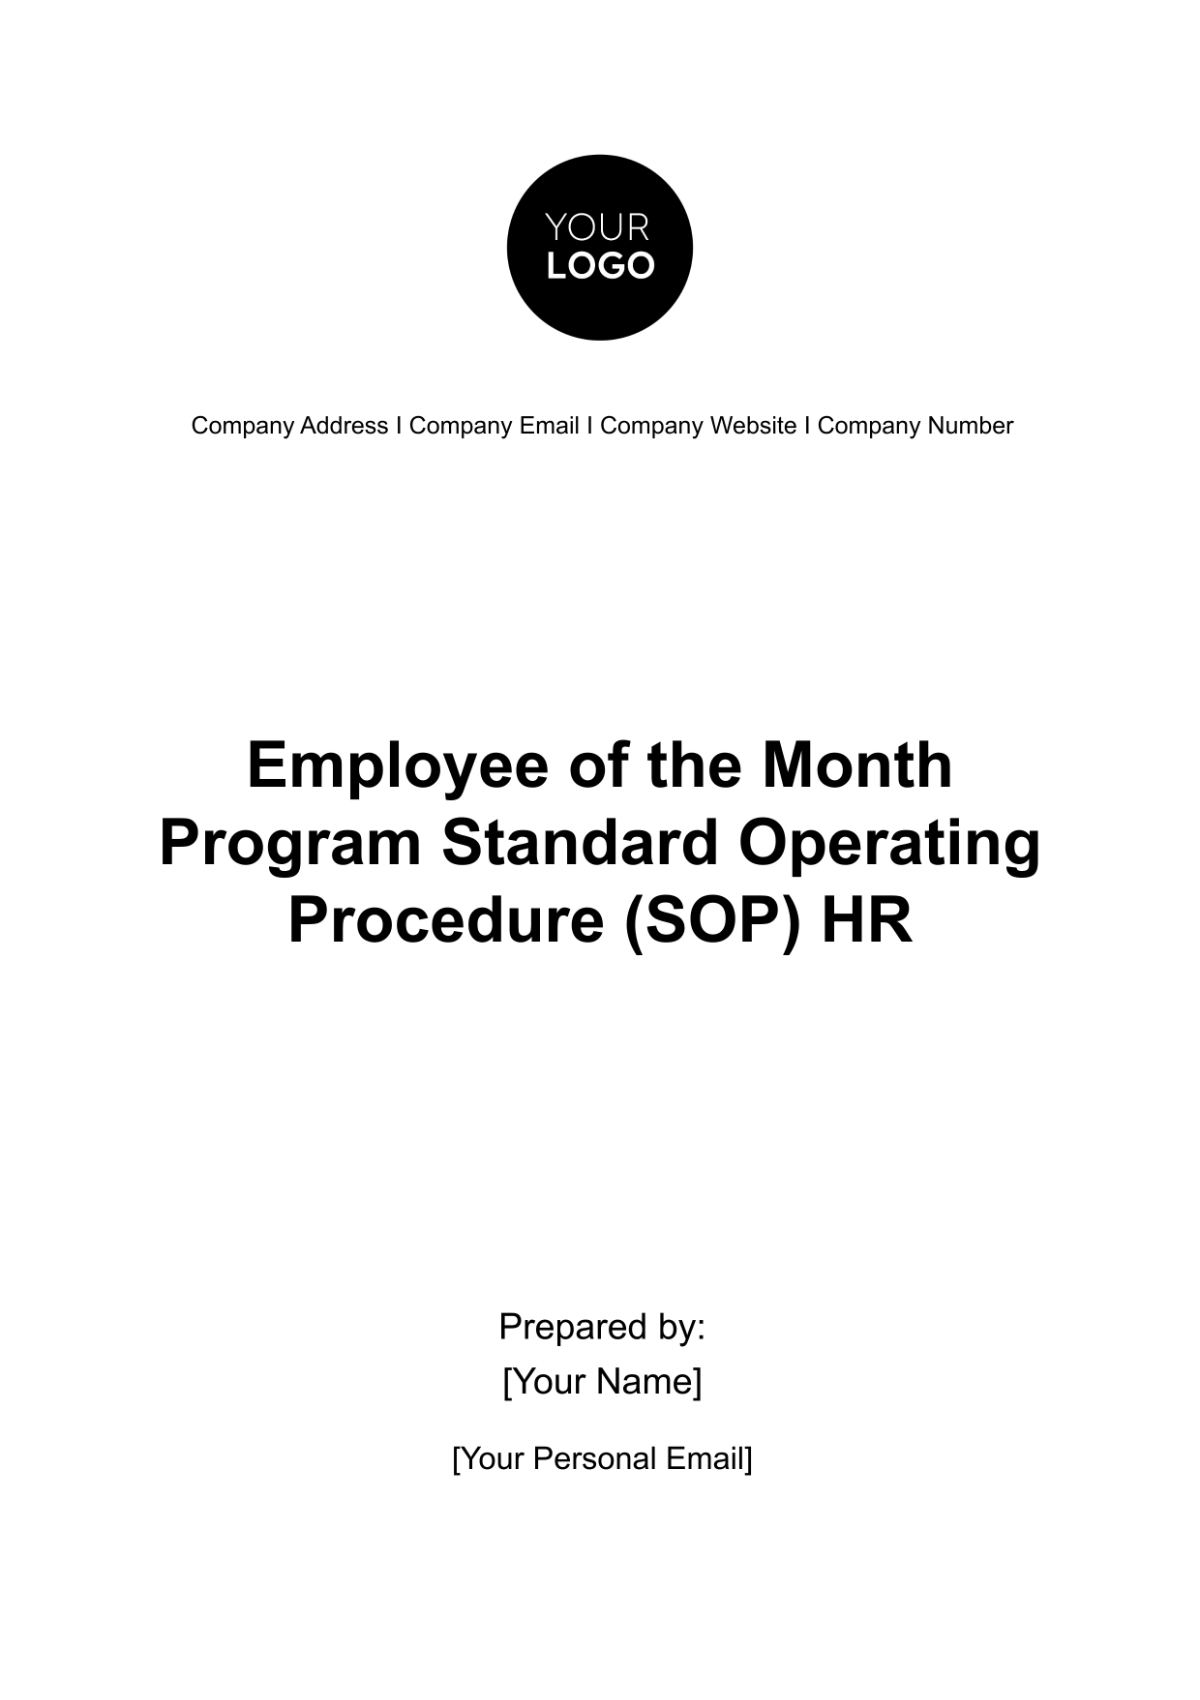 Employee of the Month Program Standard Operating Procedure (SOP) HR Template